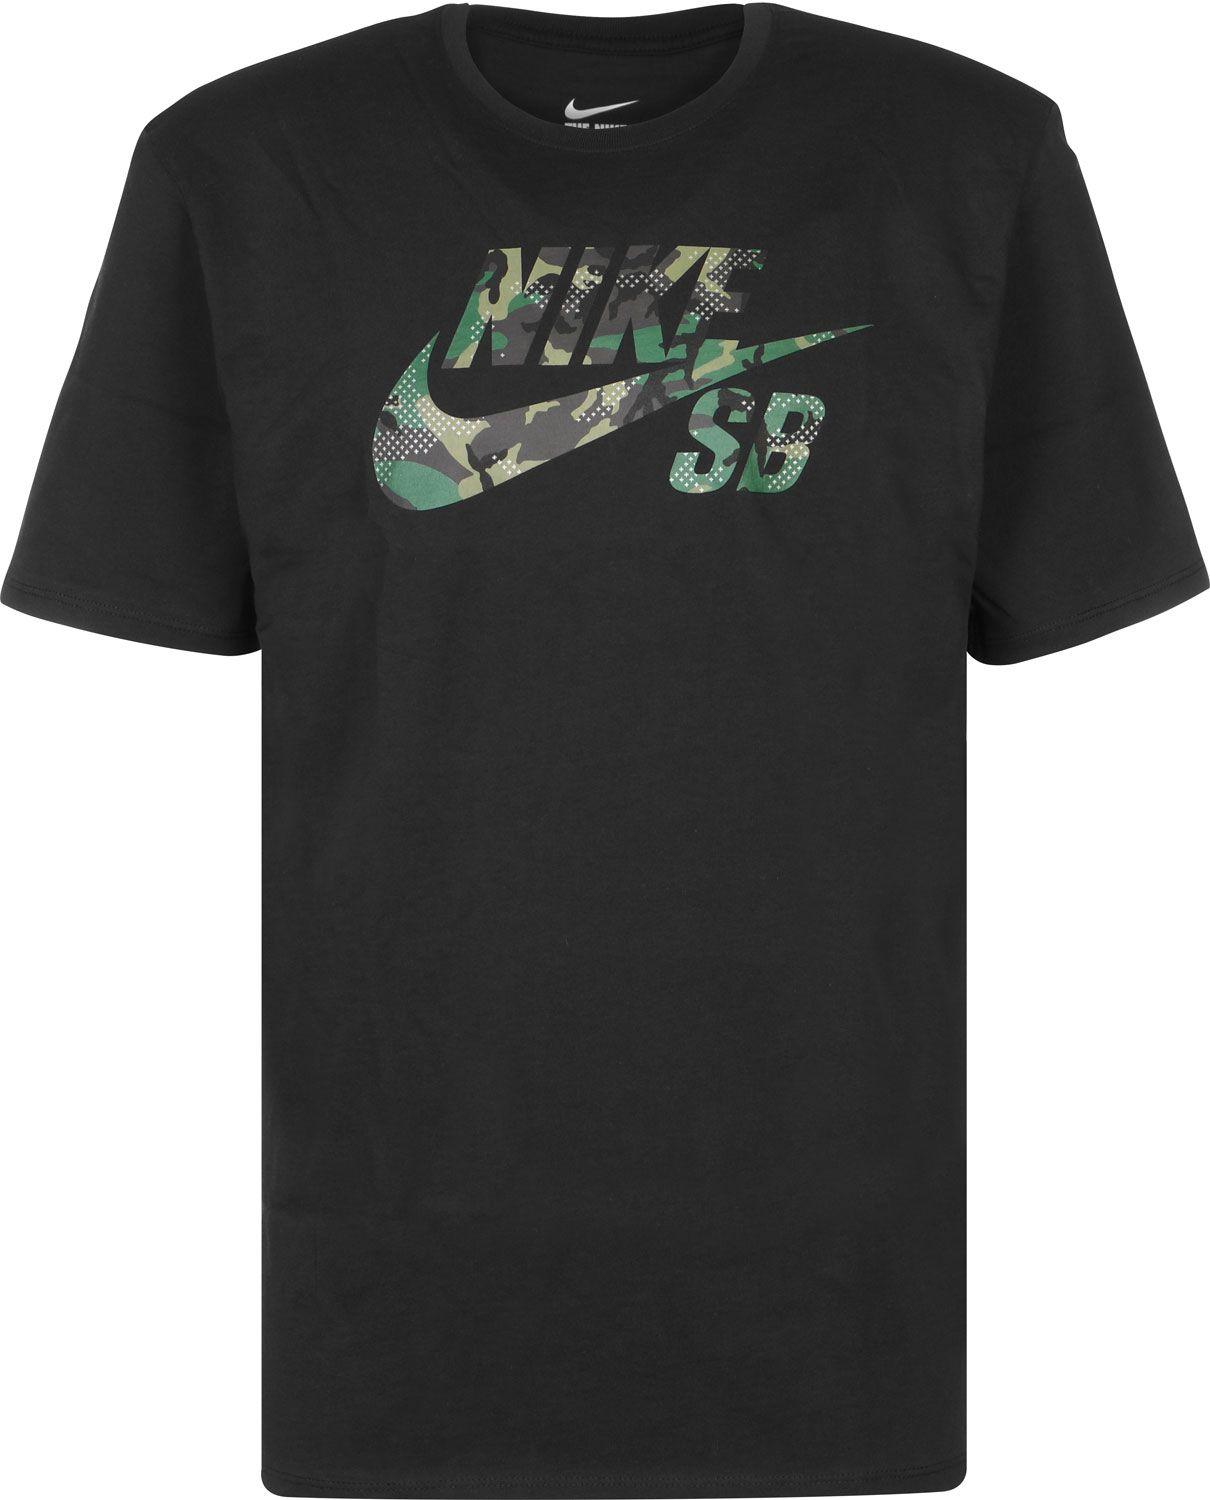 Nike SB Camo Logo - Nike SB Icon Camo Fill T-shirt black | WeAre Shop